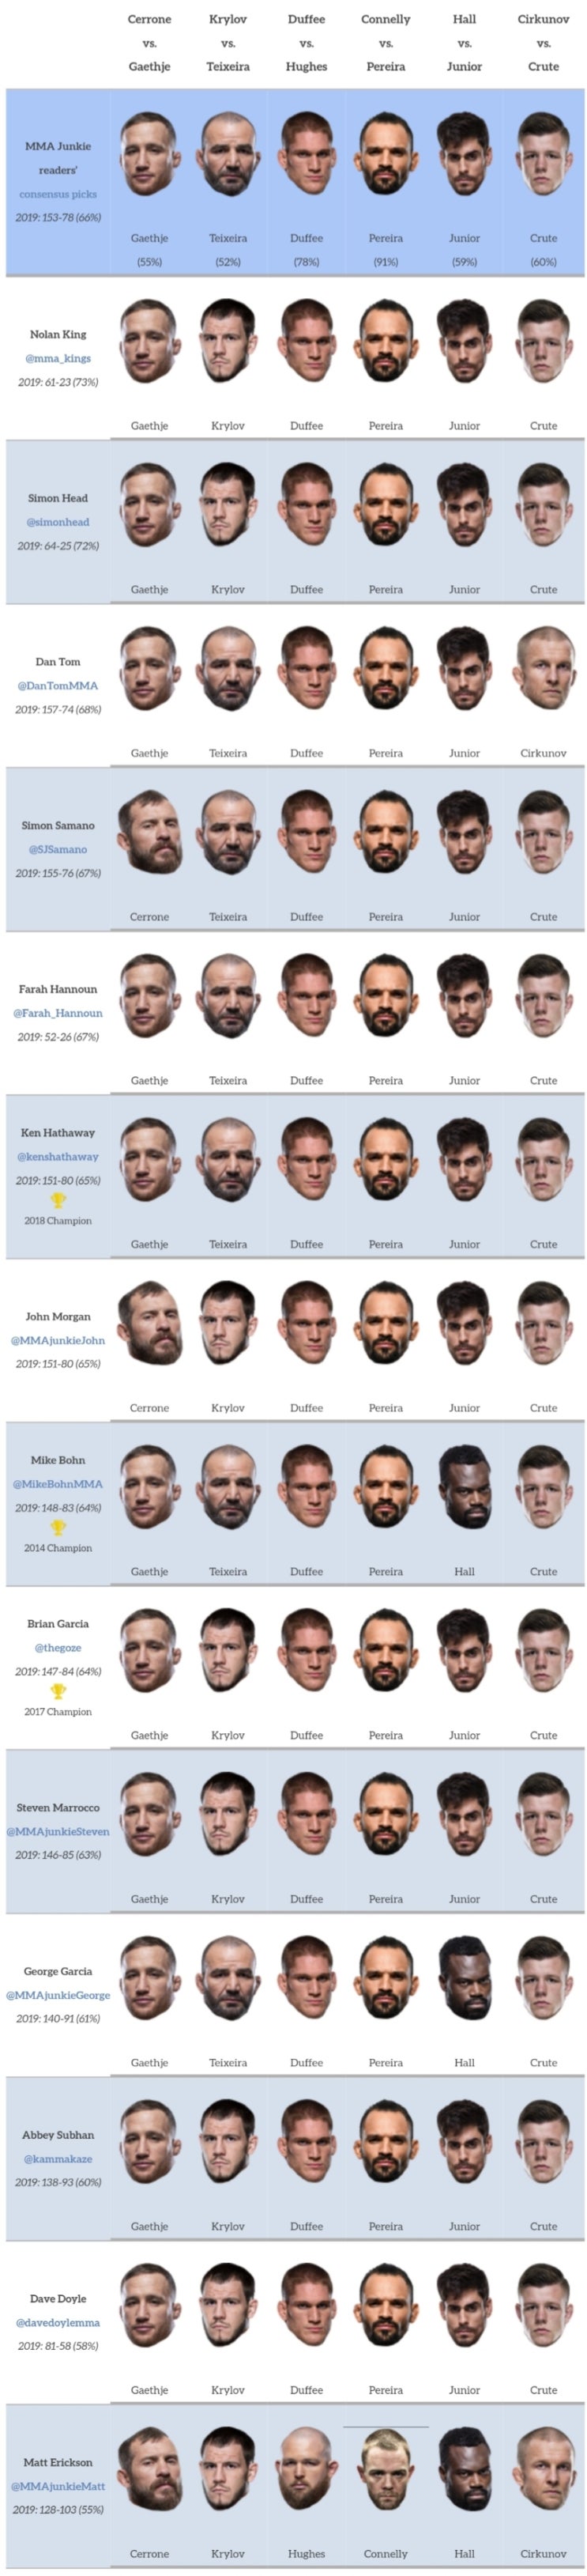 UFC 저스틴 개이치 vs 도널드 세로니 미디어 예상 및 배당률